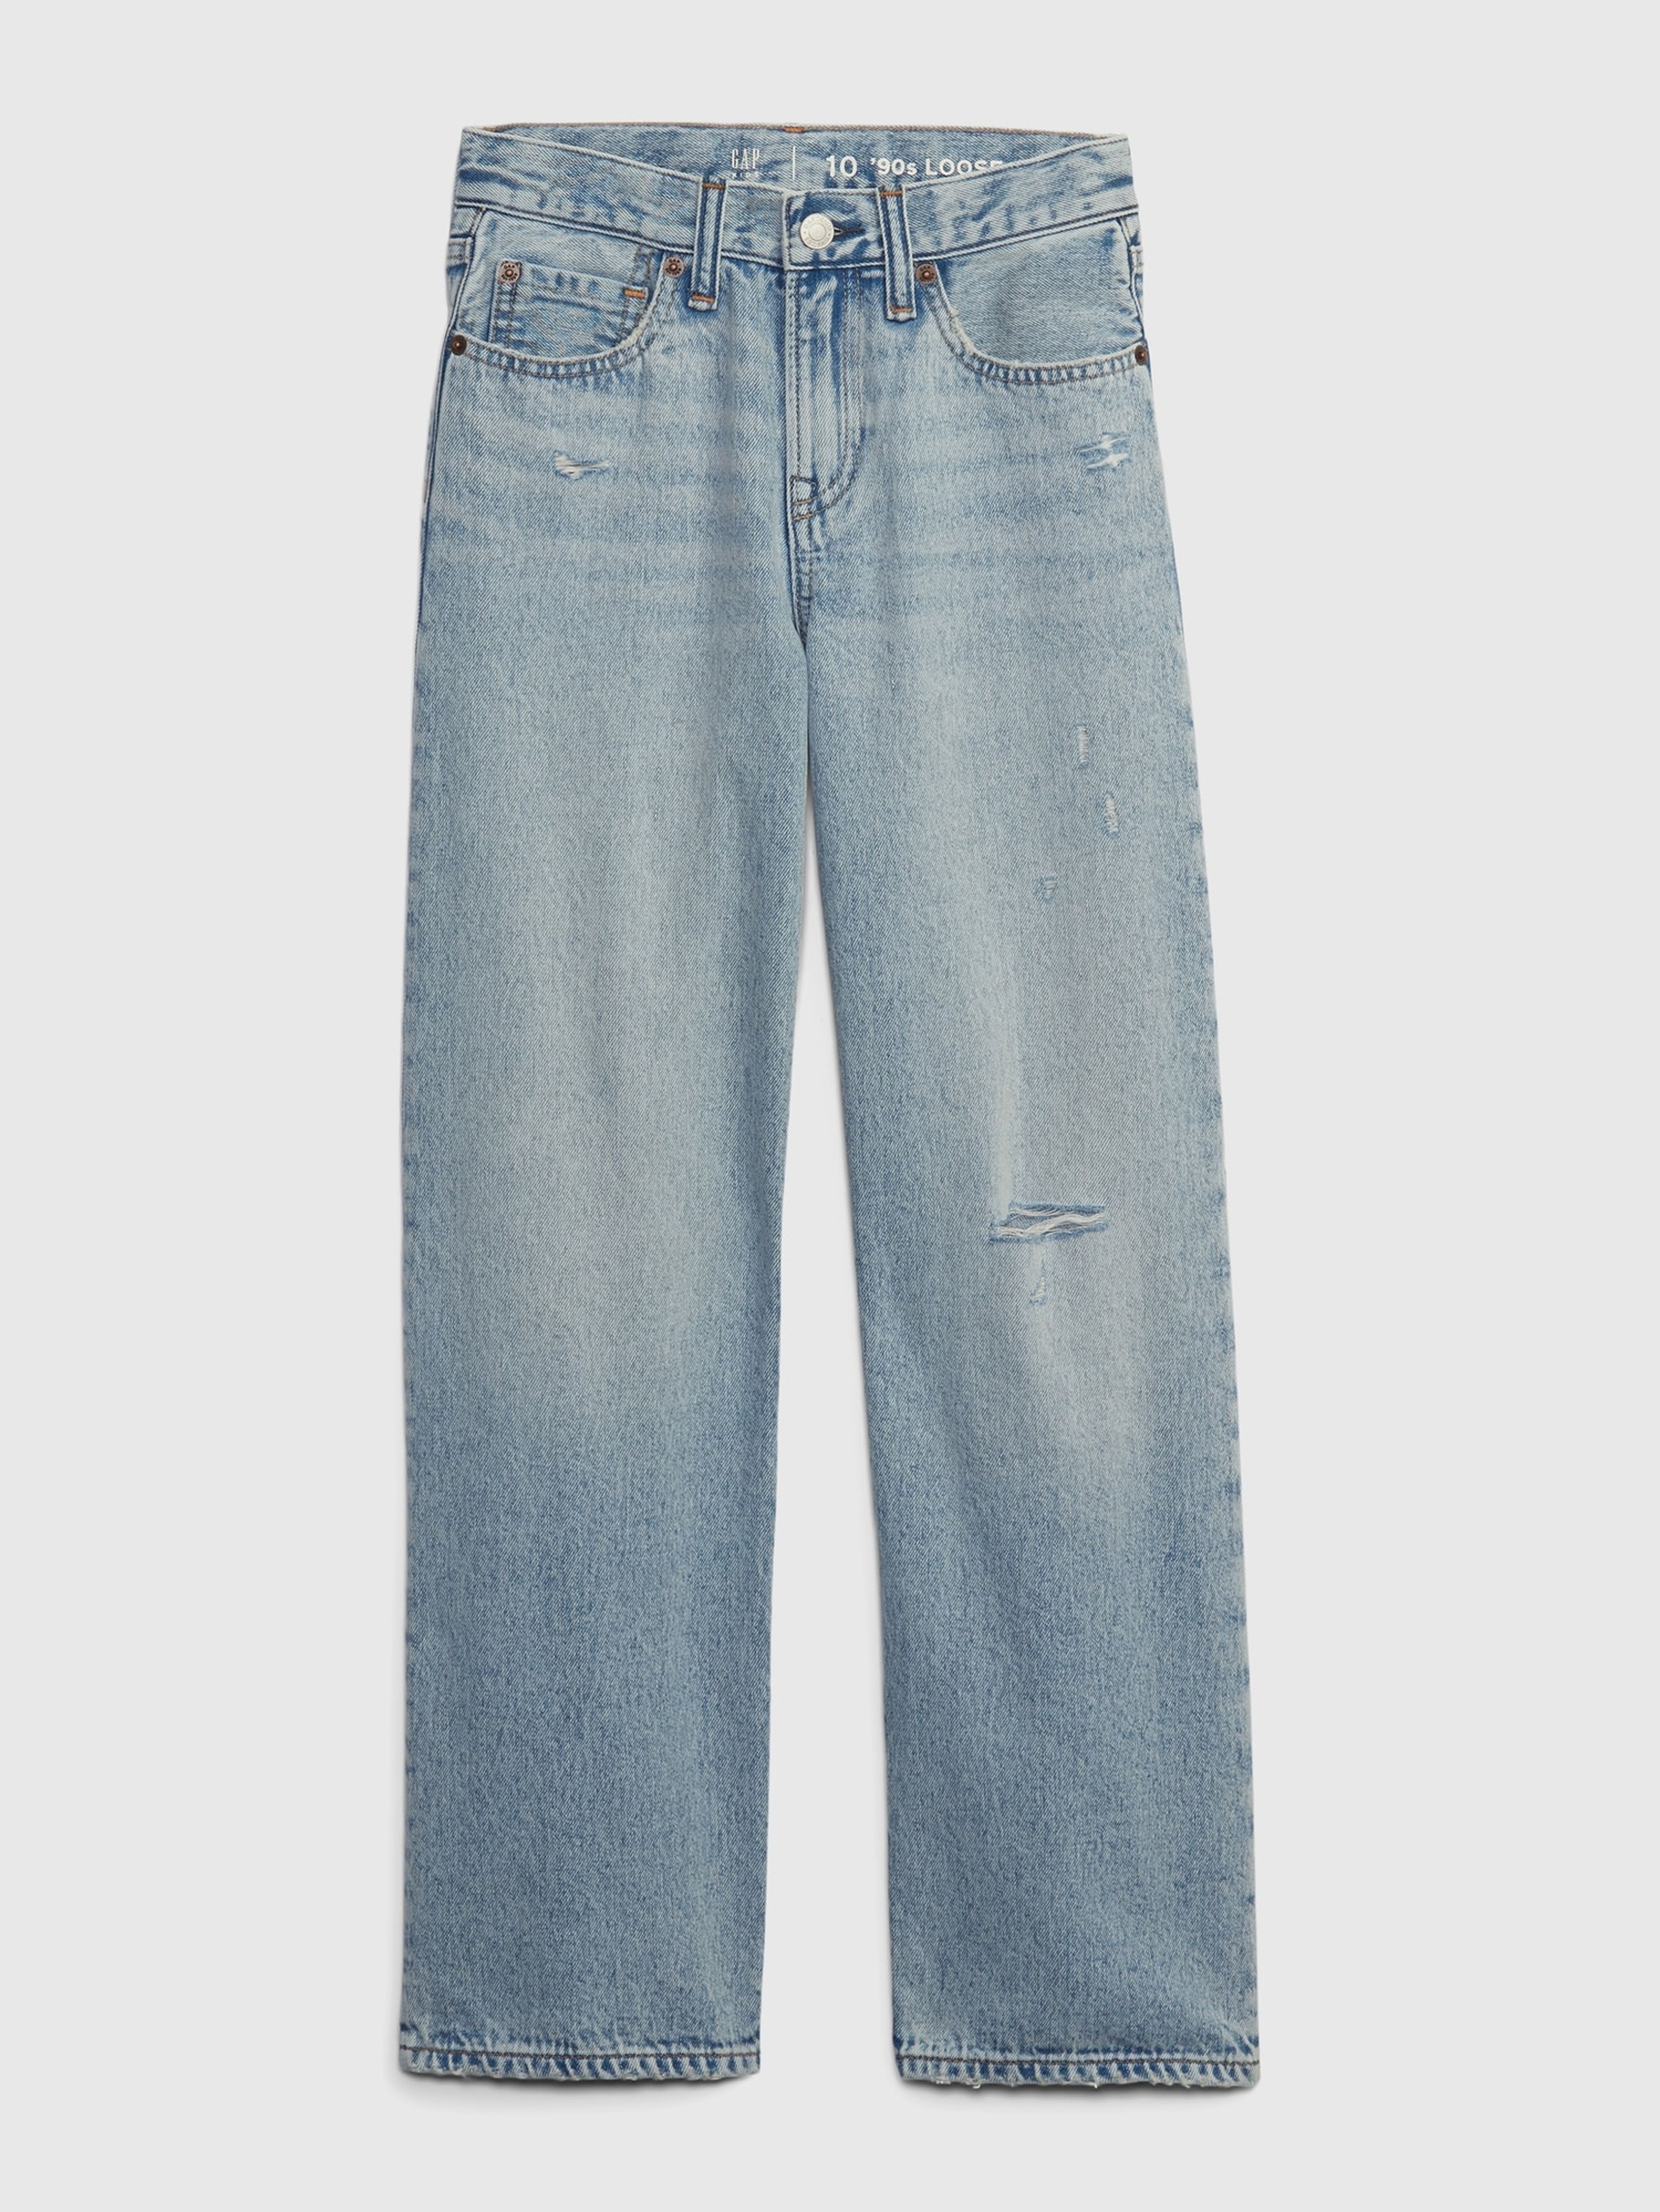 Kinder-Jeans '90s Loose organic